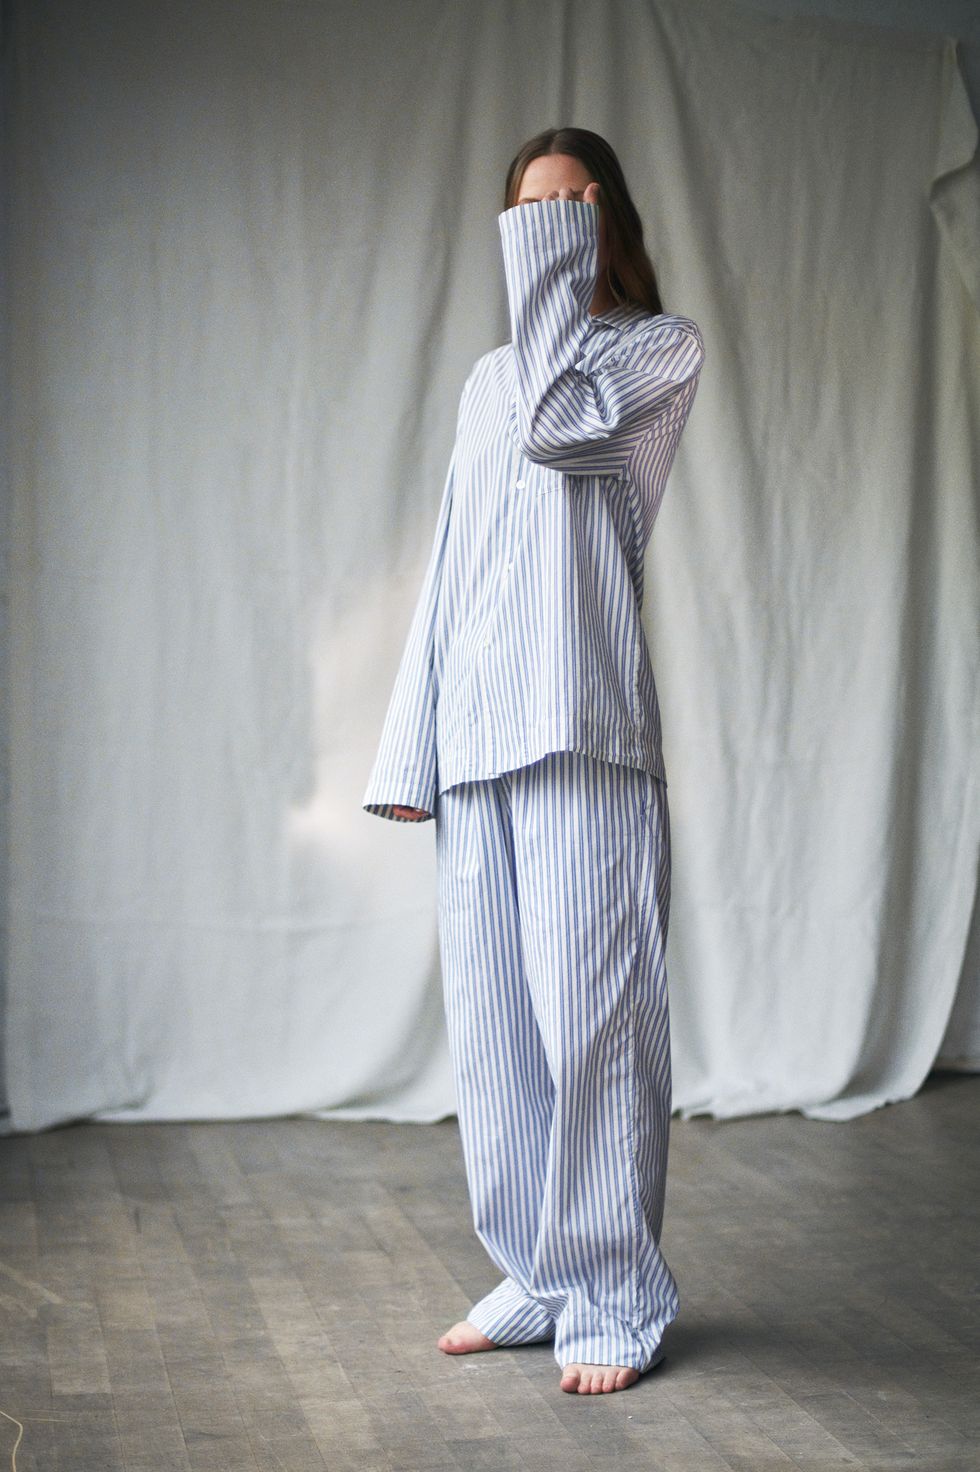 woman wearing striped pyjamas